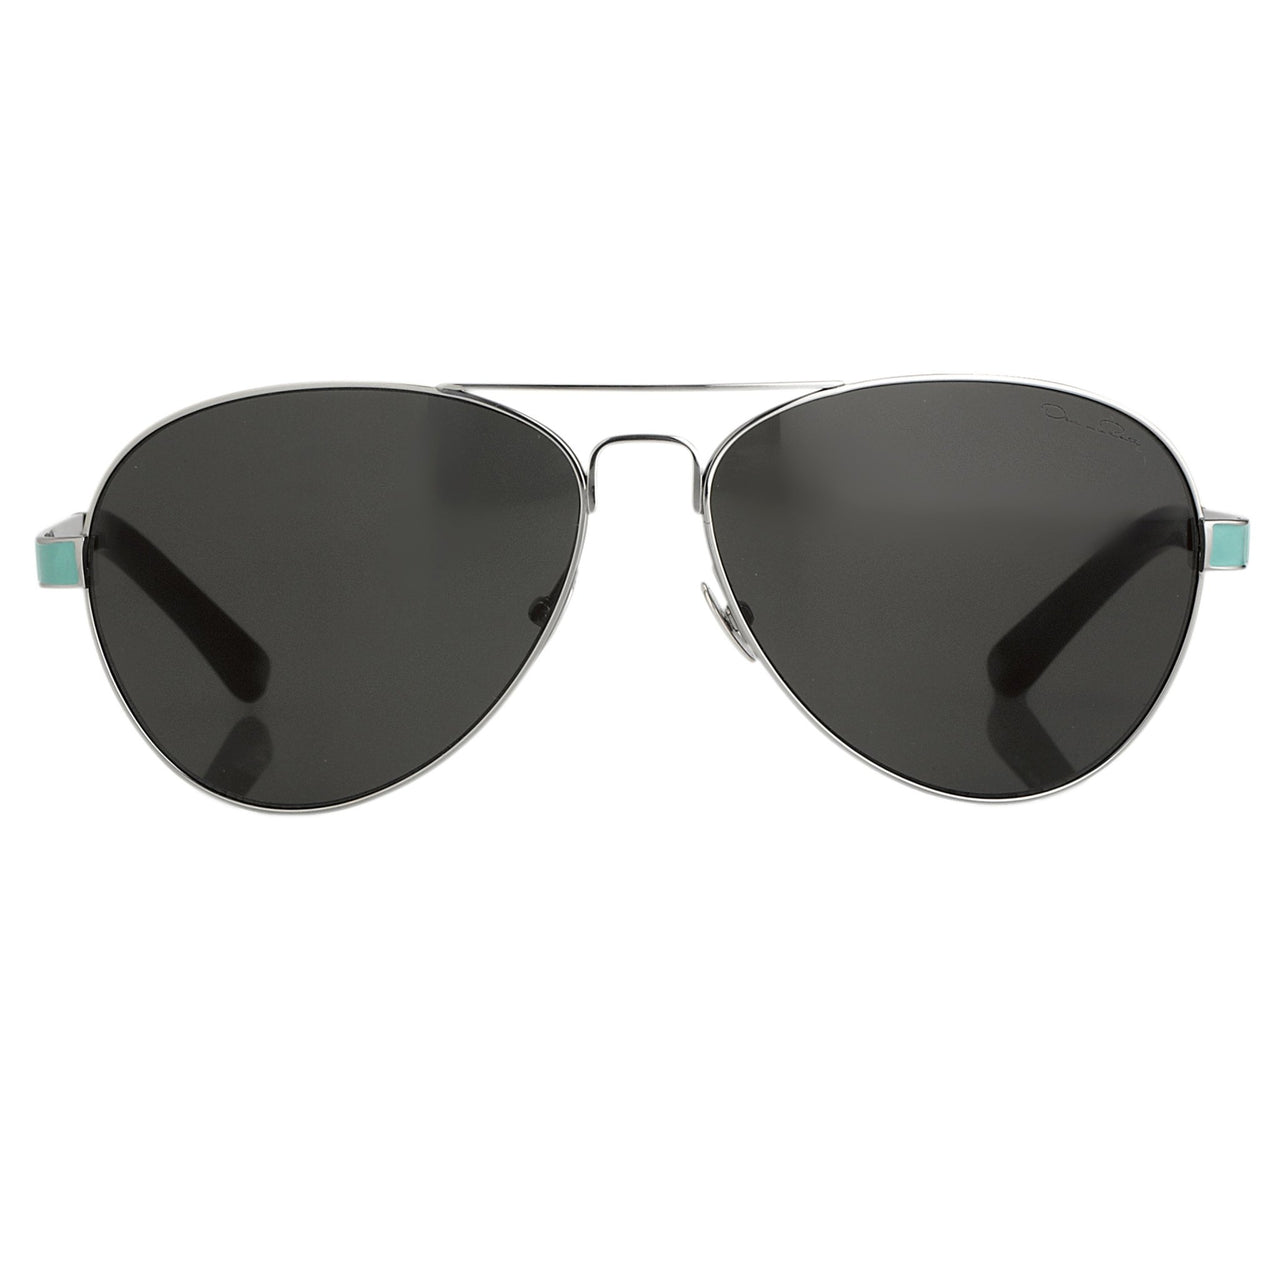 Oscar De La Renta Women Sunglasses Silver Multicoloured Enamel with Dark Grey Lenses Category 3 - ODLR44C6SUN - Watches & Crystals